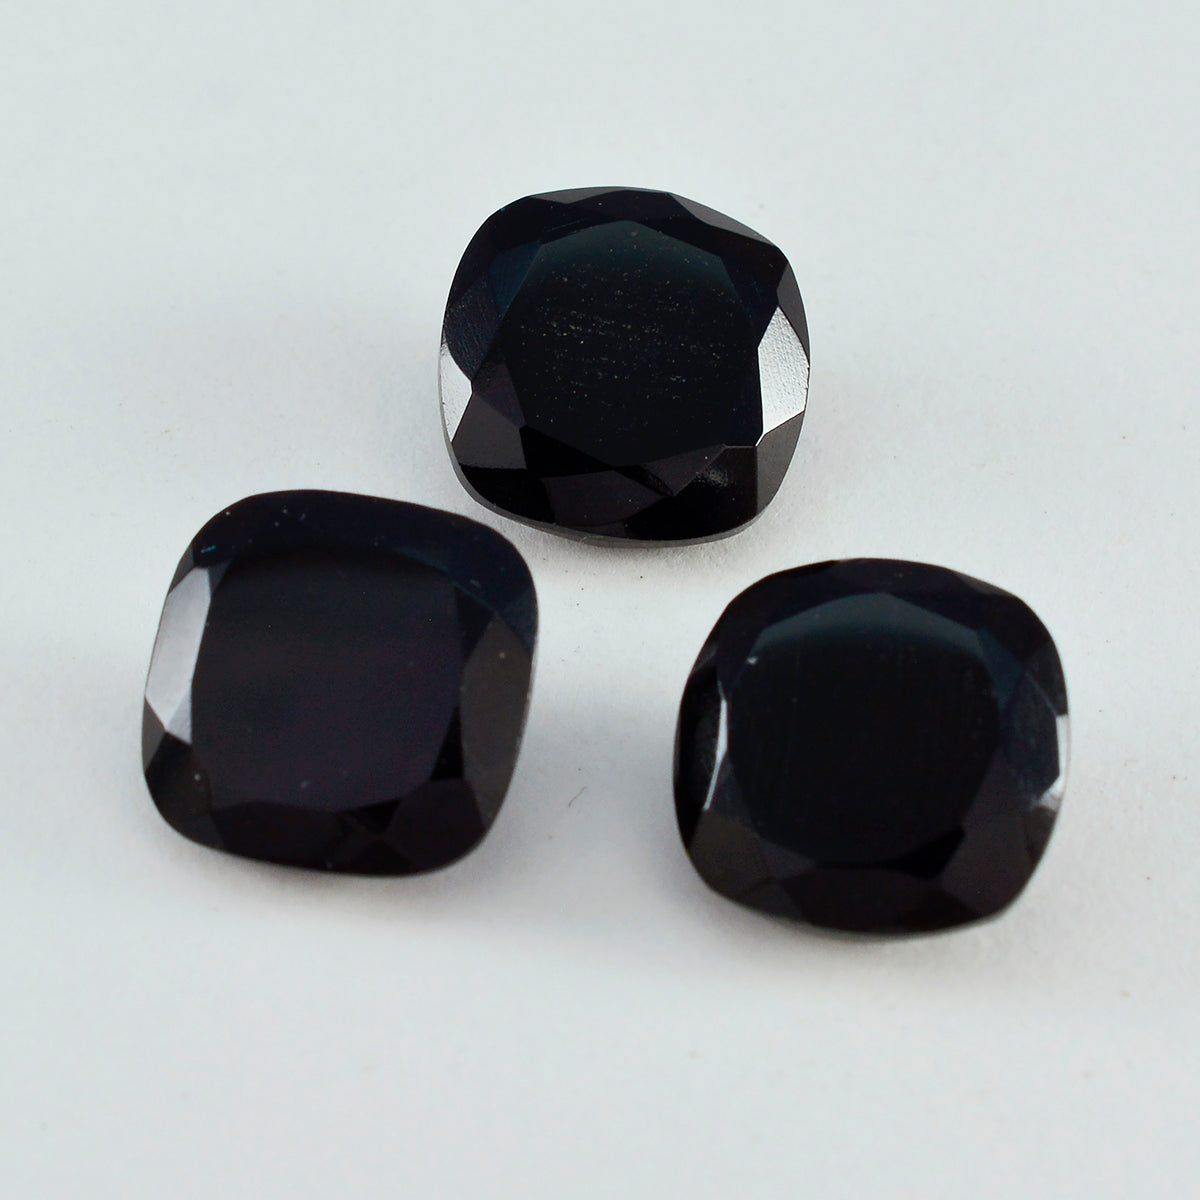 Riyogems 1PC Real Black Onyx Faceted 13x13 mm Cushion Shape nice-looking Quality Stone